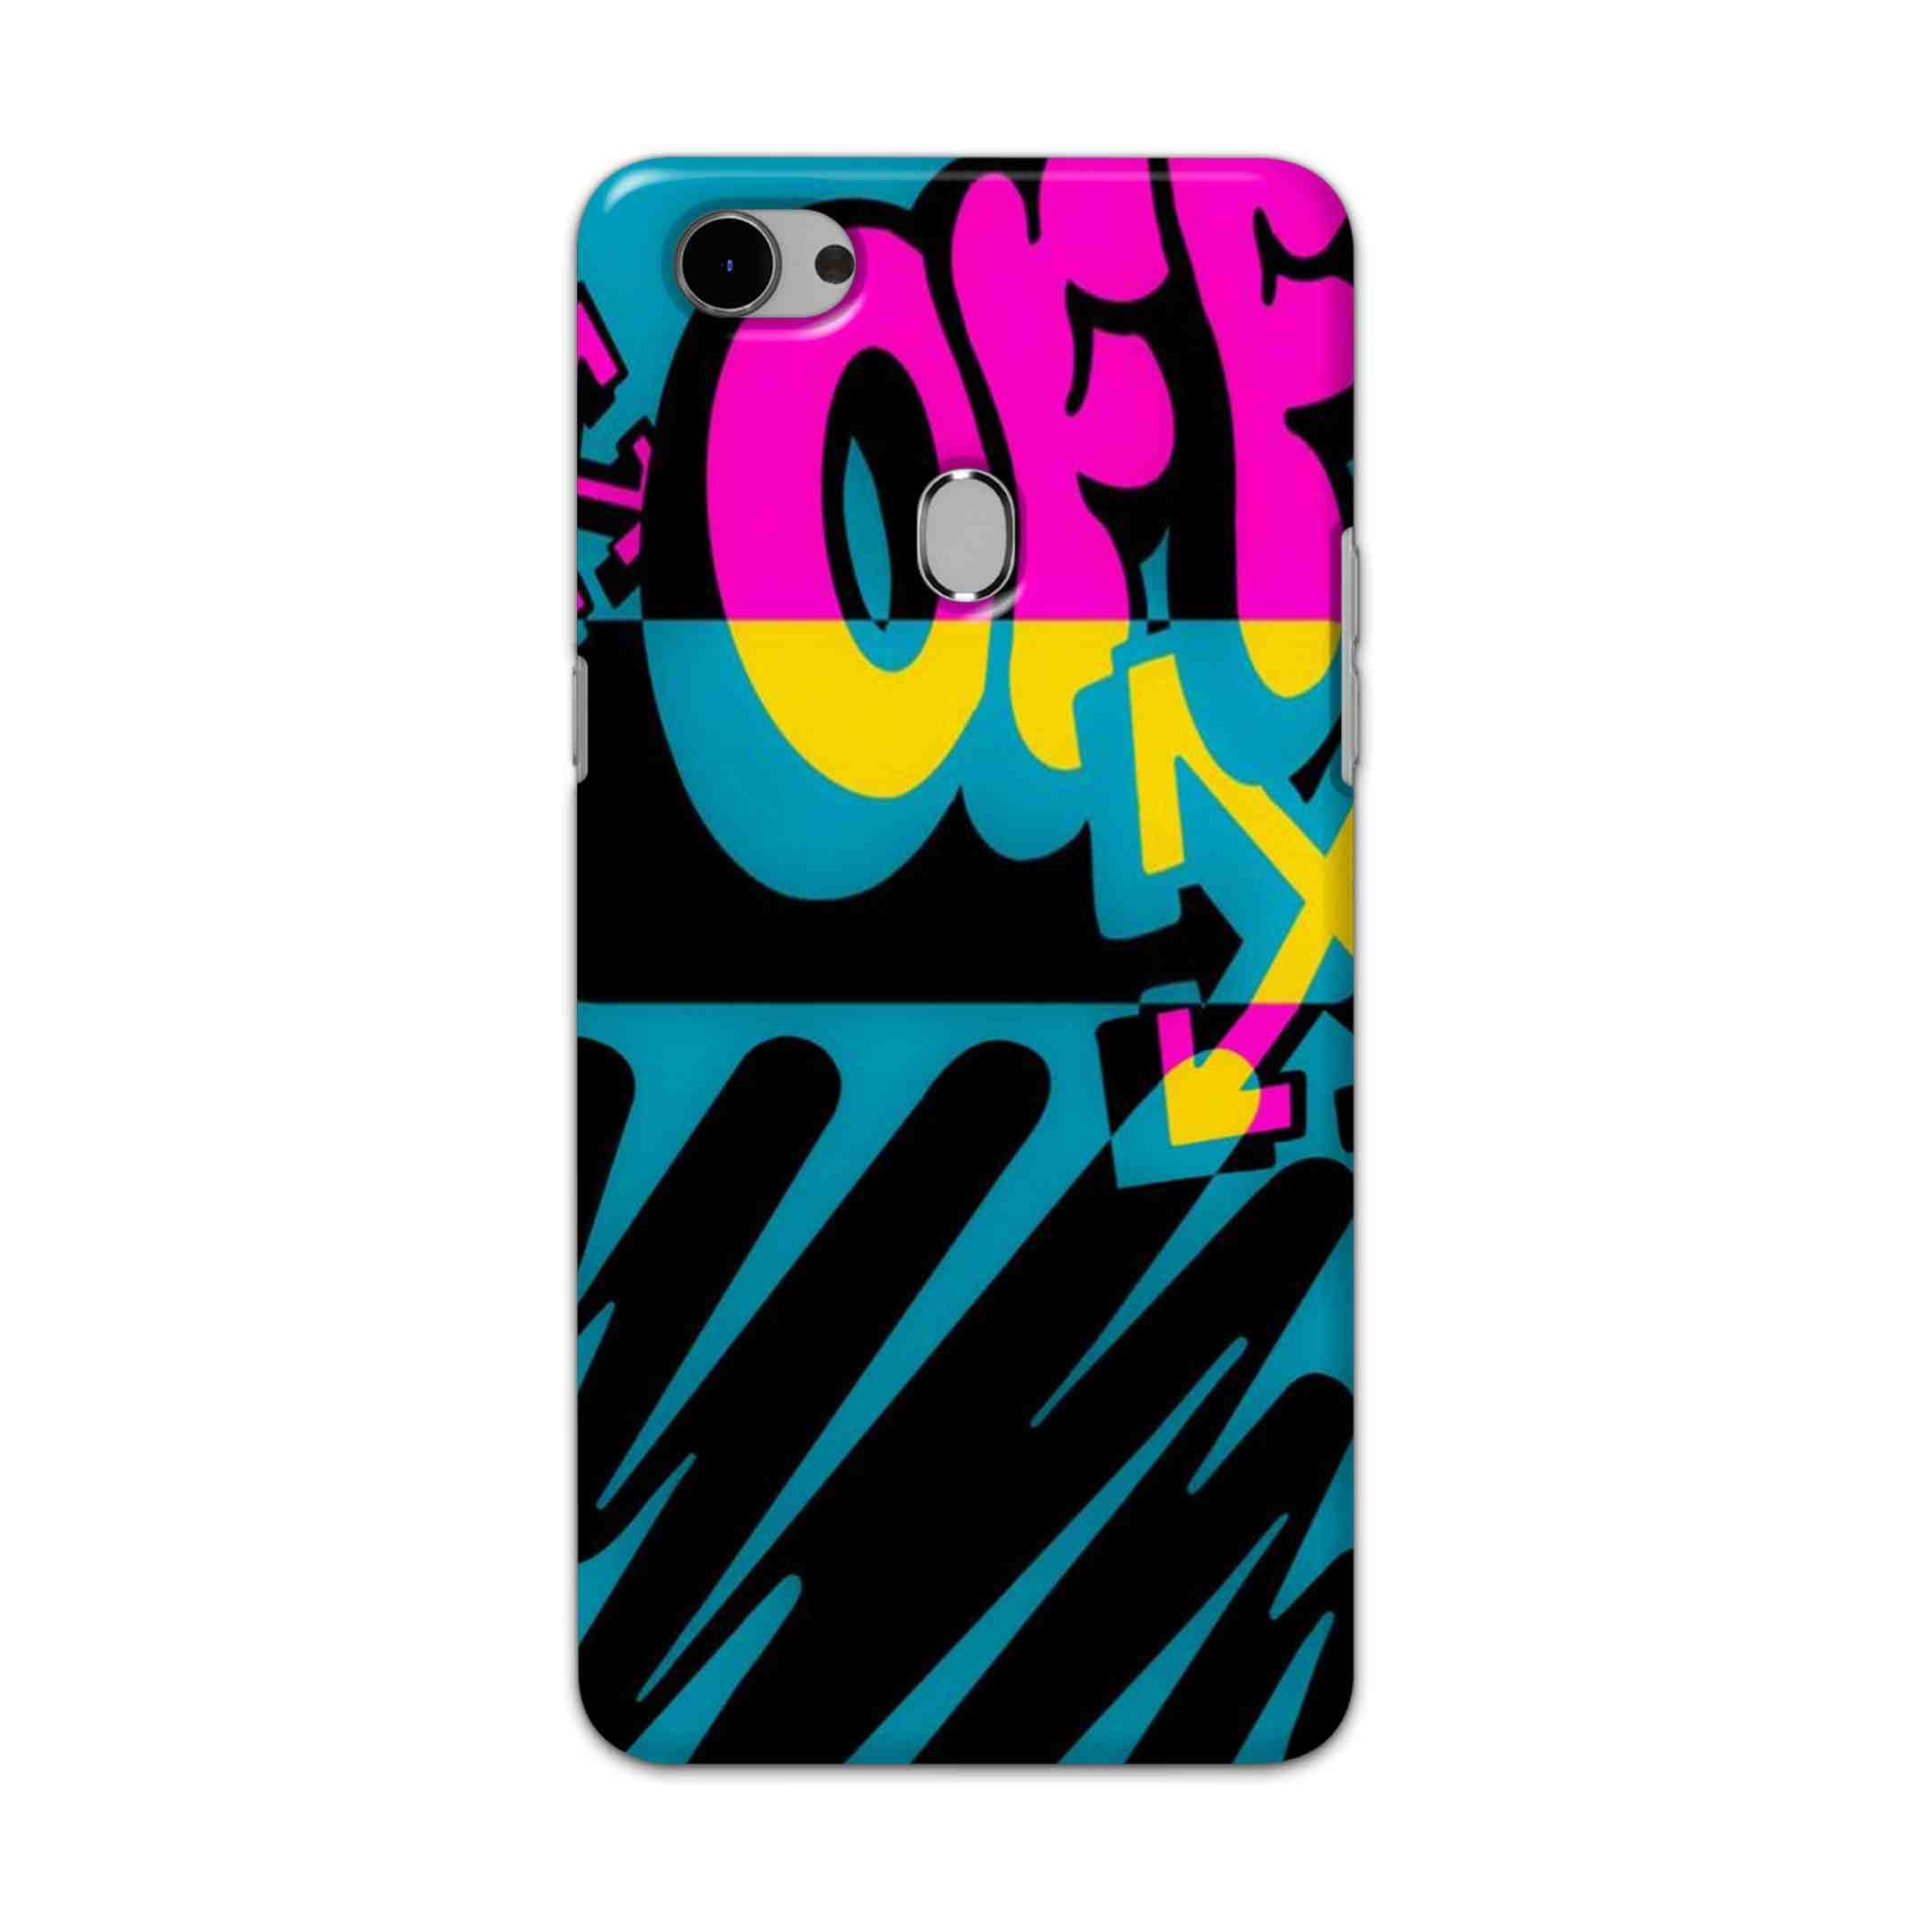 Buy Off Hard Back Mobile Phone Case Cover For Oppo F7 Online